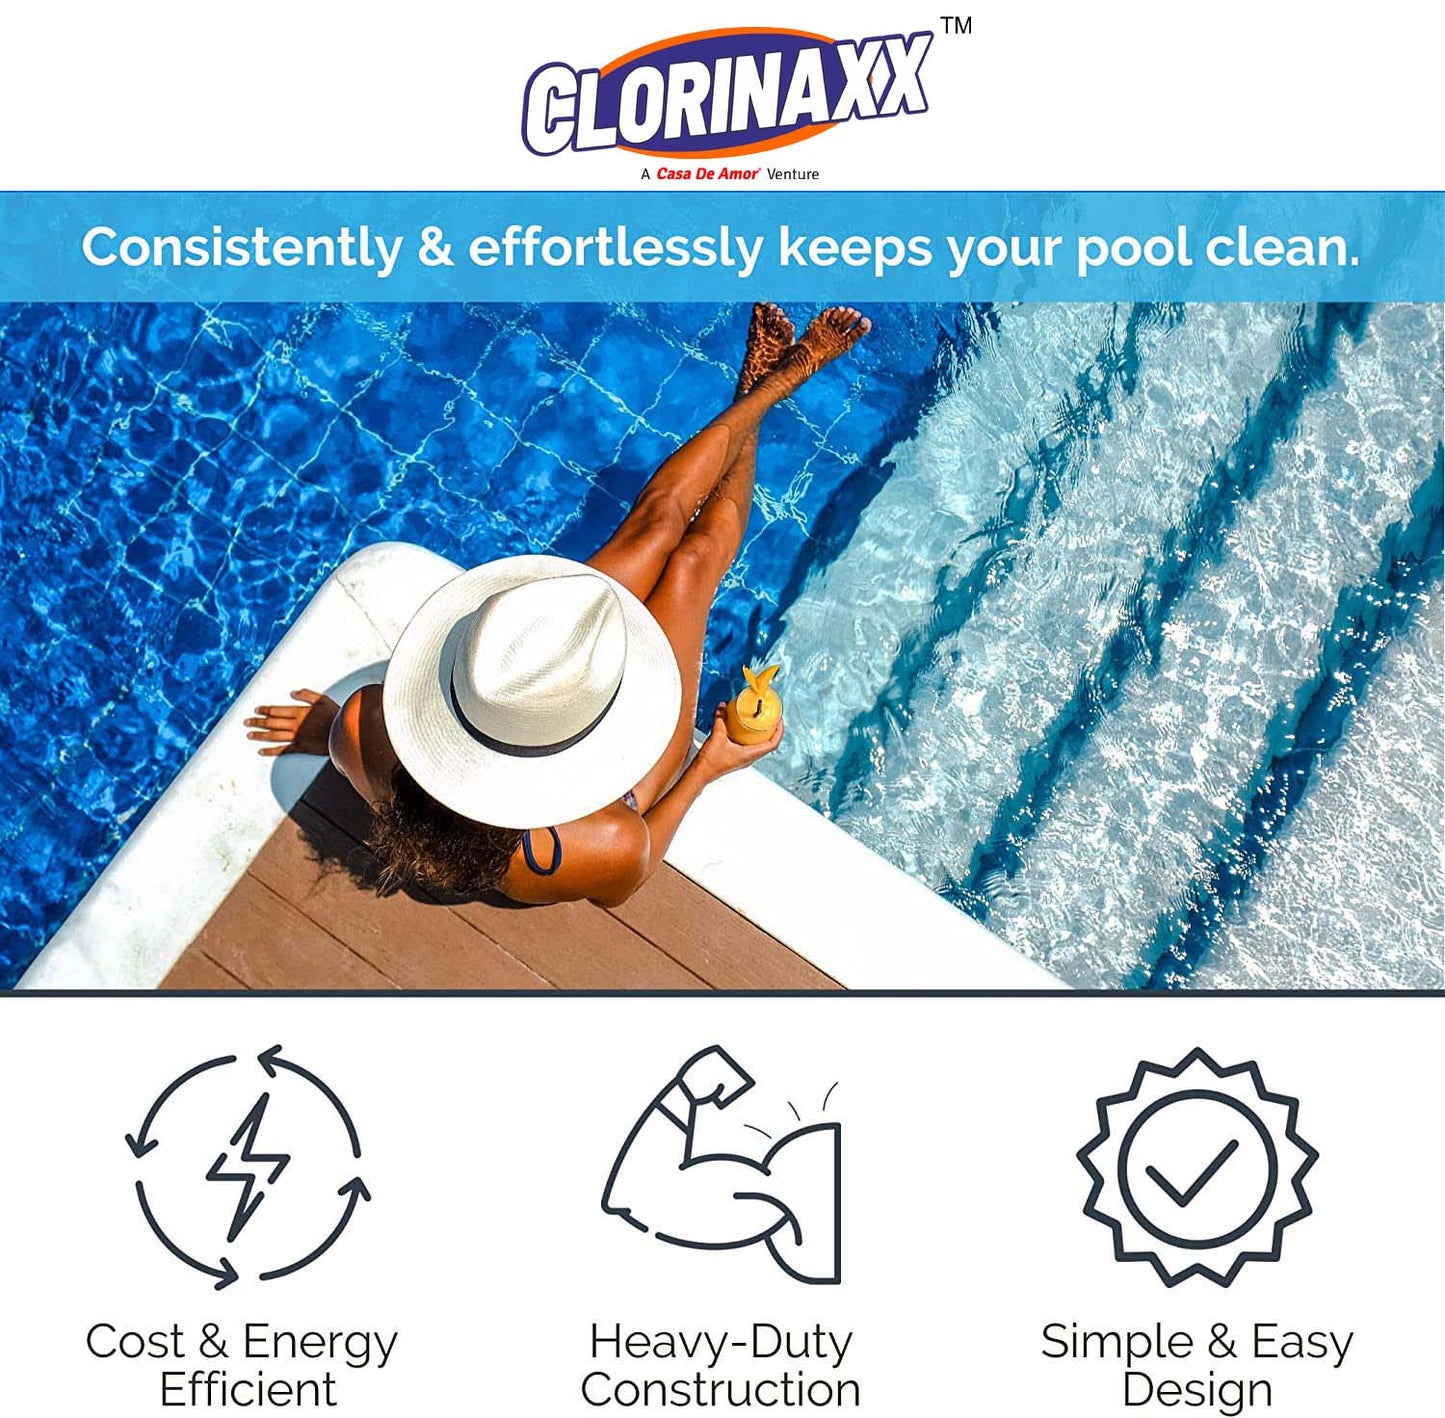 Clorinaxx Swimming Pool Chemical Dispenser, Plastic Swimming Pool Medicine Floating Automatic Cleaning Dispenser Swimming Pool Equipment